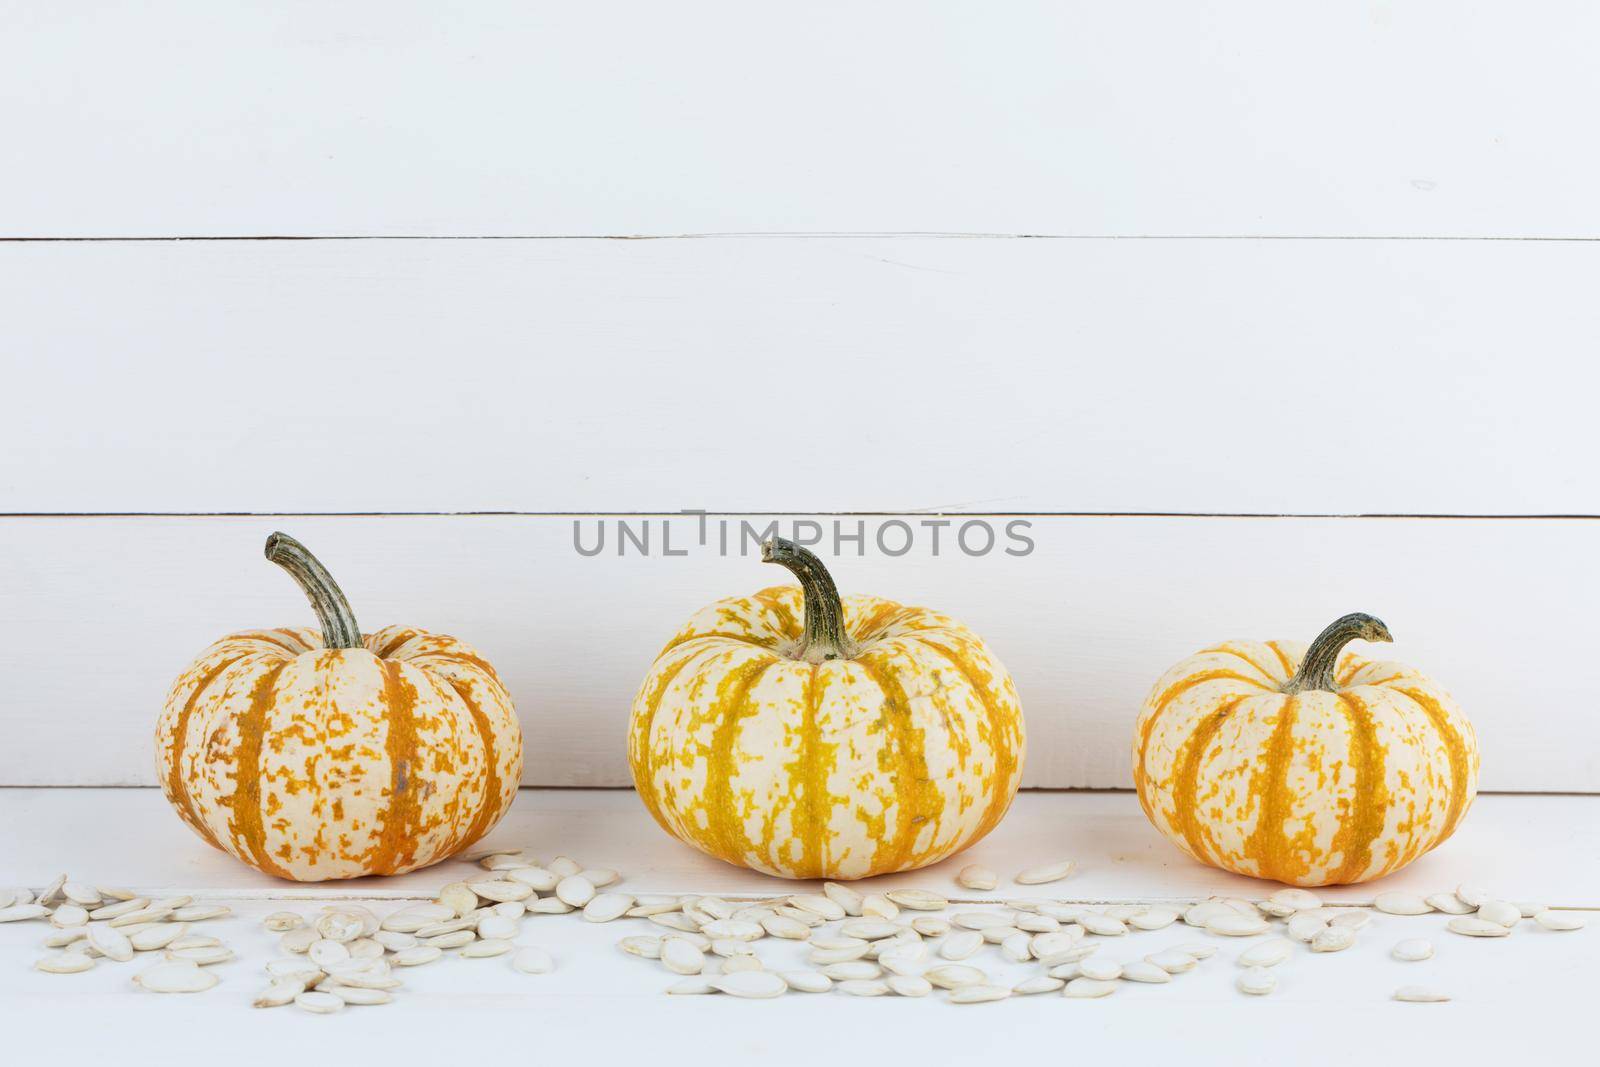 Three orange striped decorative pumpkins and seeds on white wooden background, Halloween concept